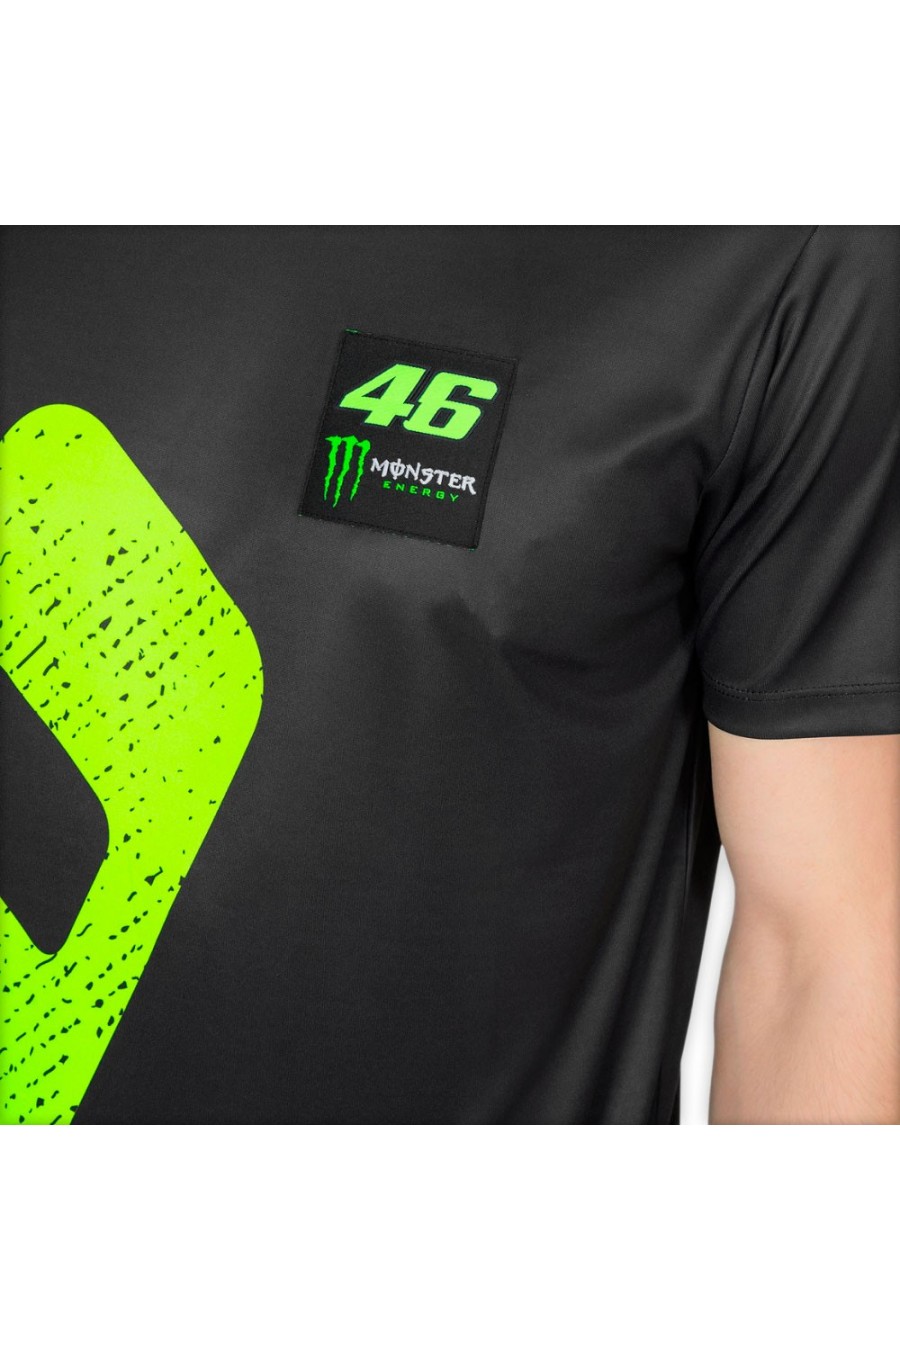 Valentino Rossi 46 Monster Energy T-Shirt